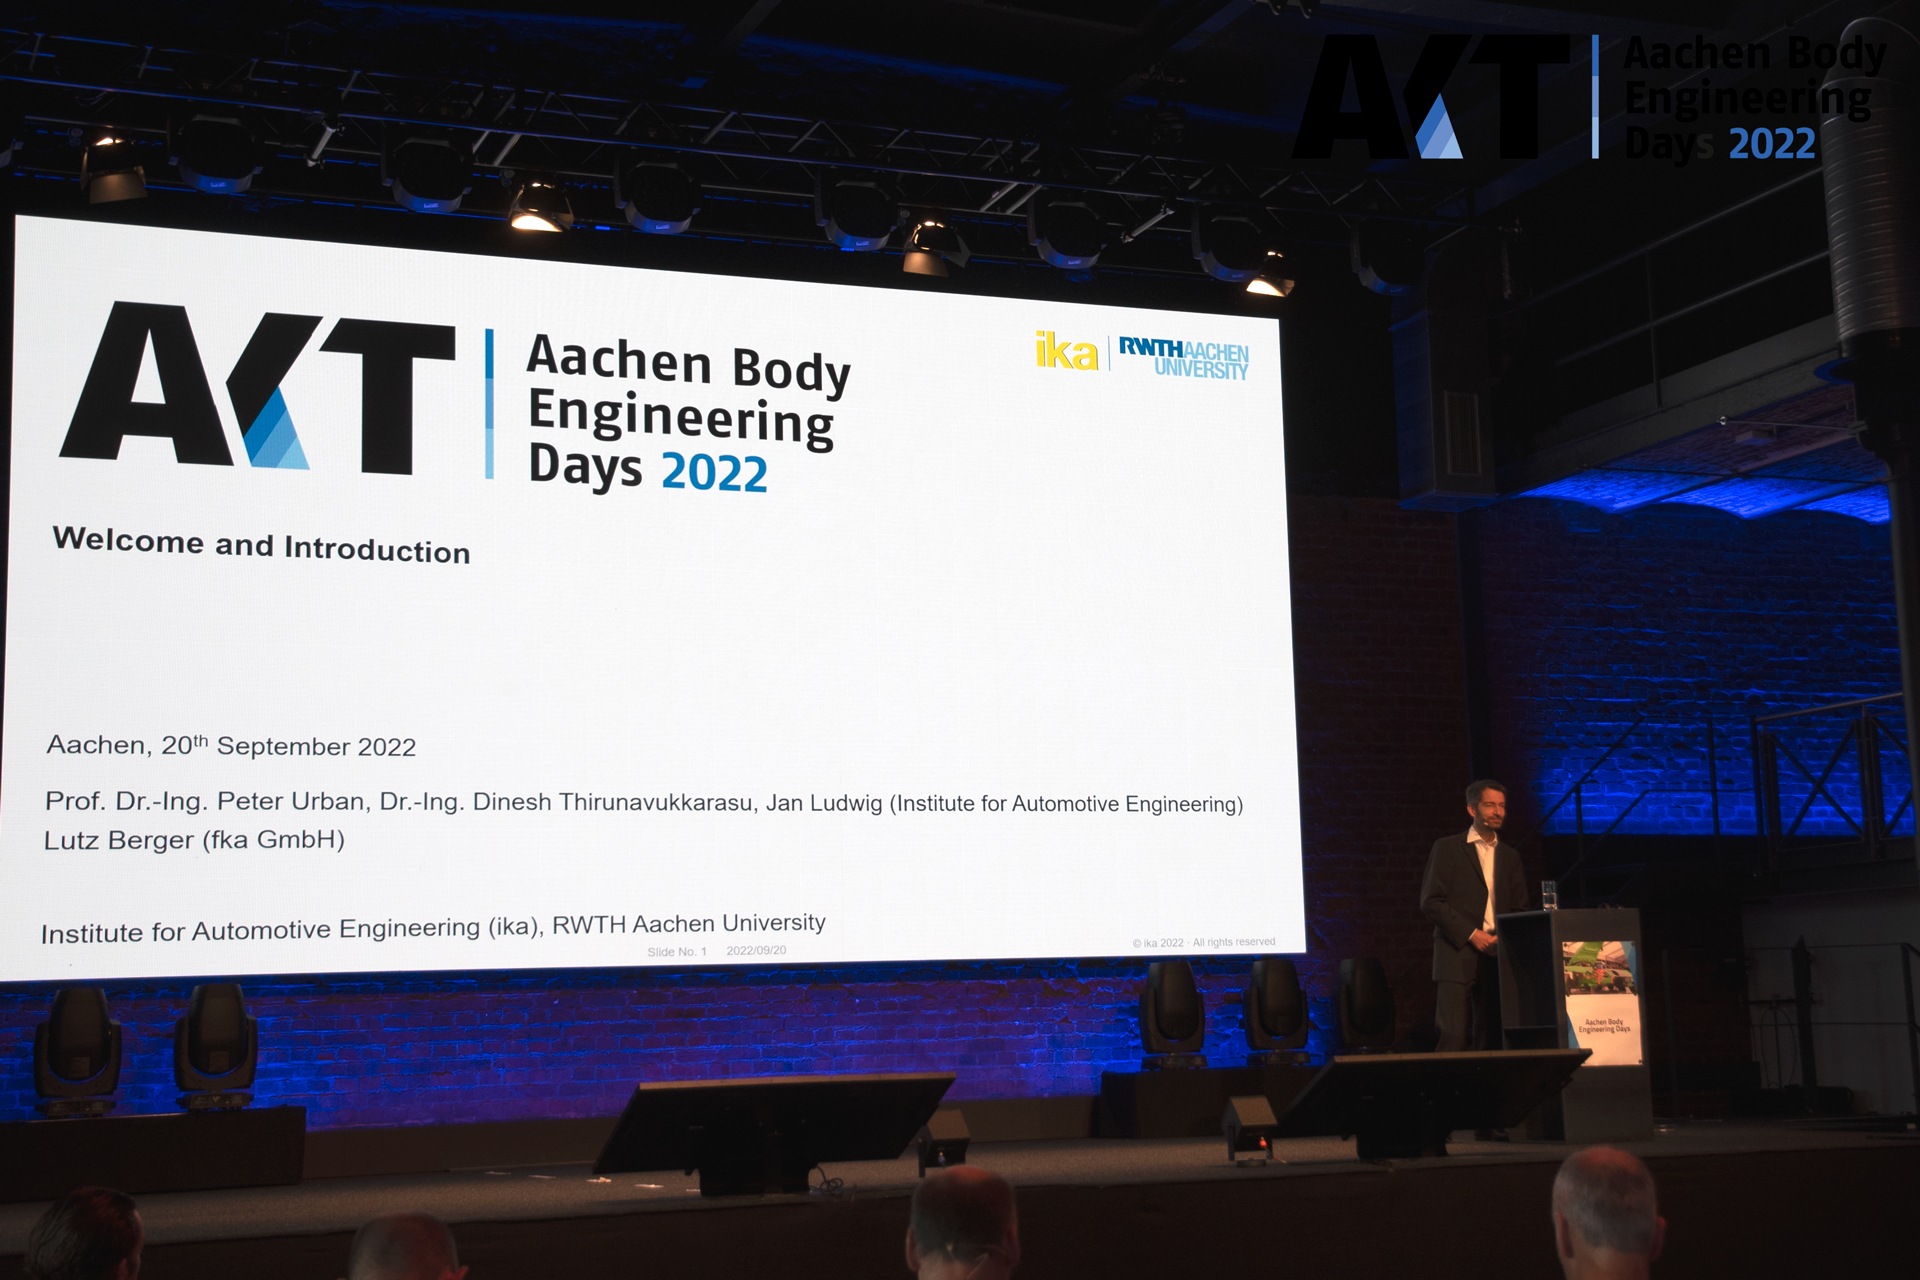 Prof. Peter Urban (ika) opens the Aachen Body Engineering Days 2022